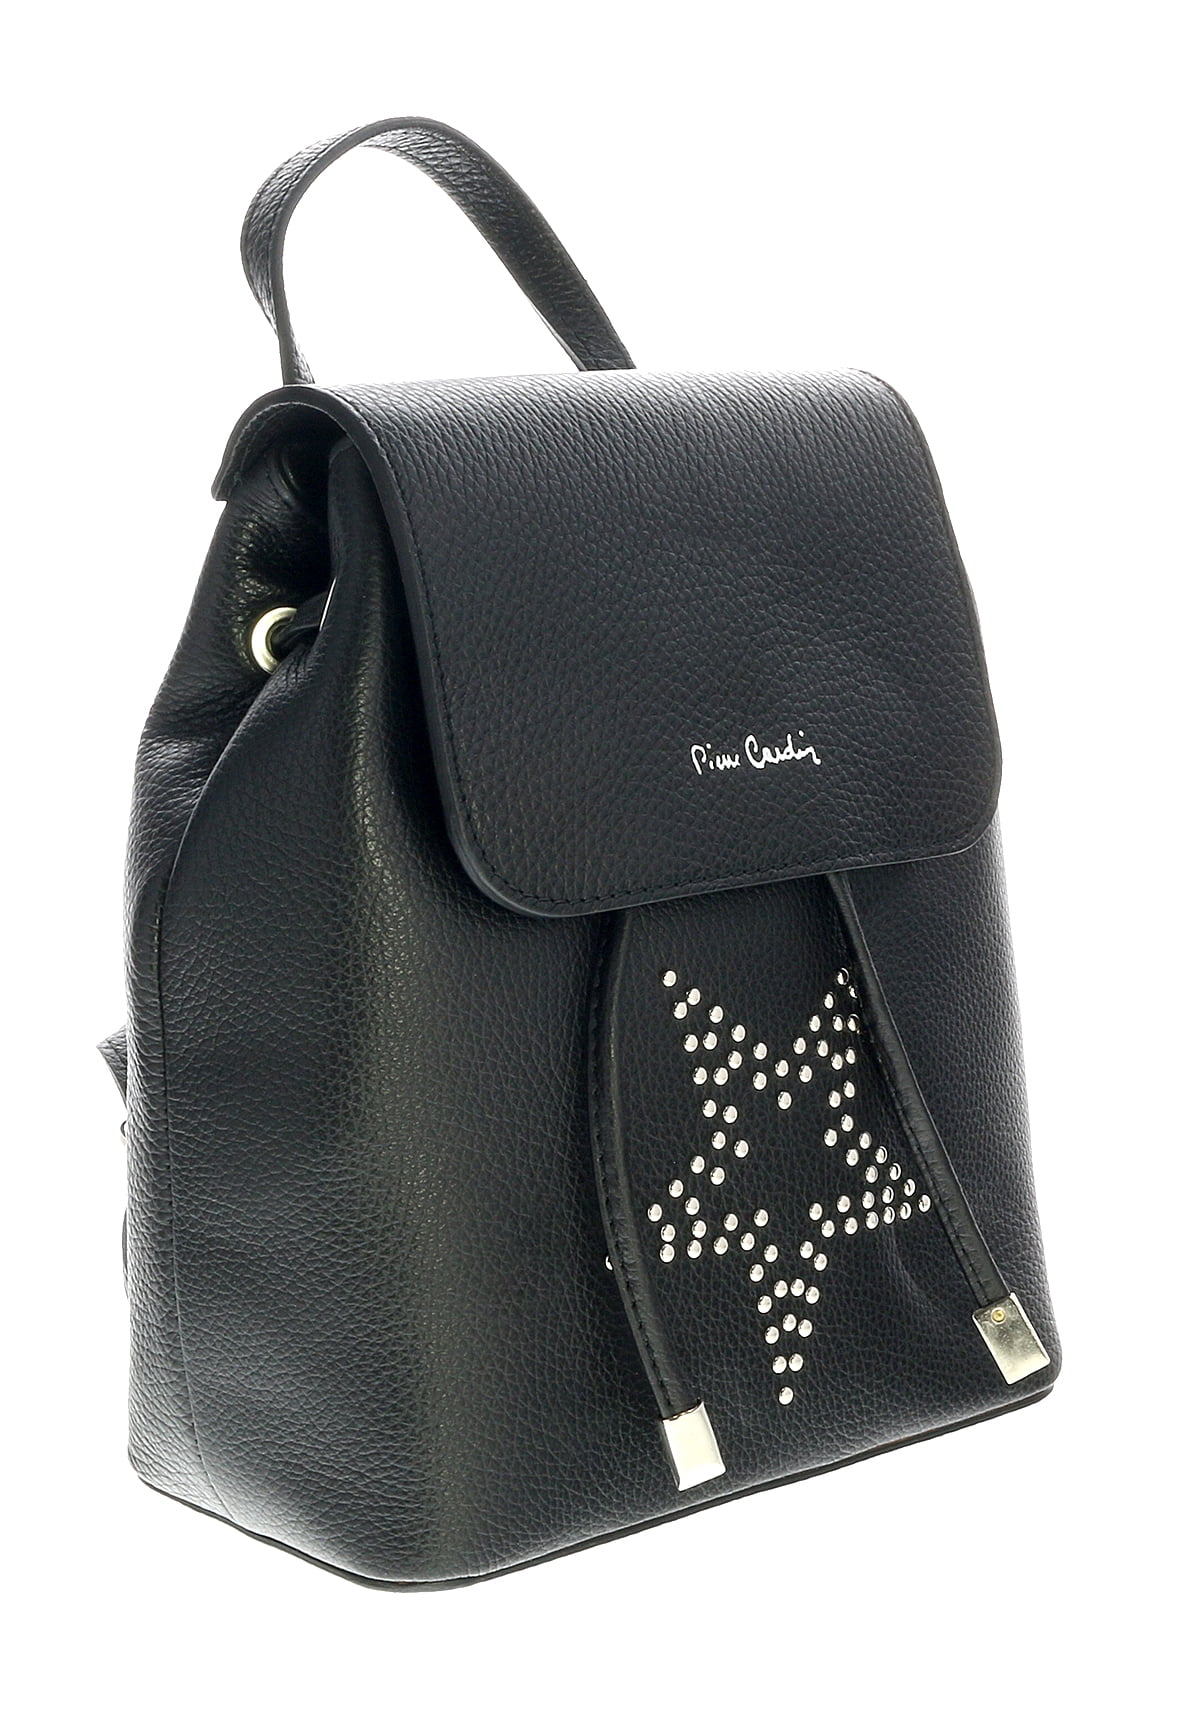 Pierre Cardin 1744 NERO Black Backpack Handbags